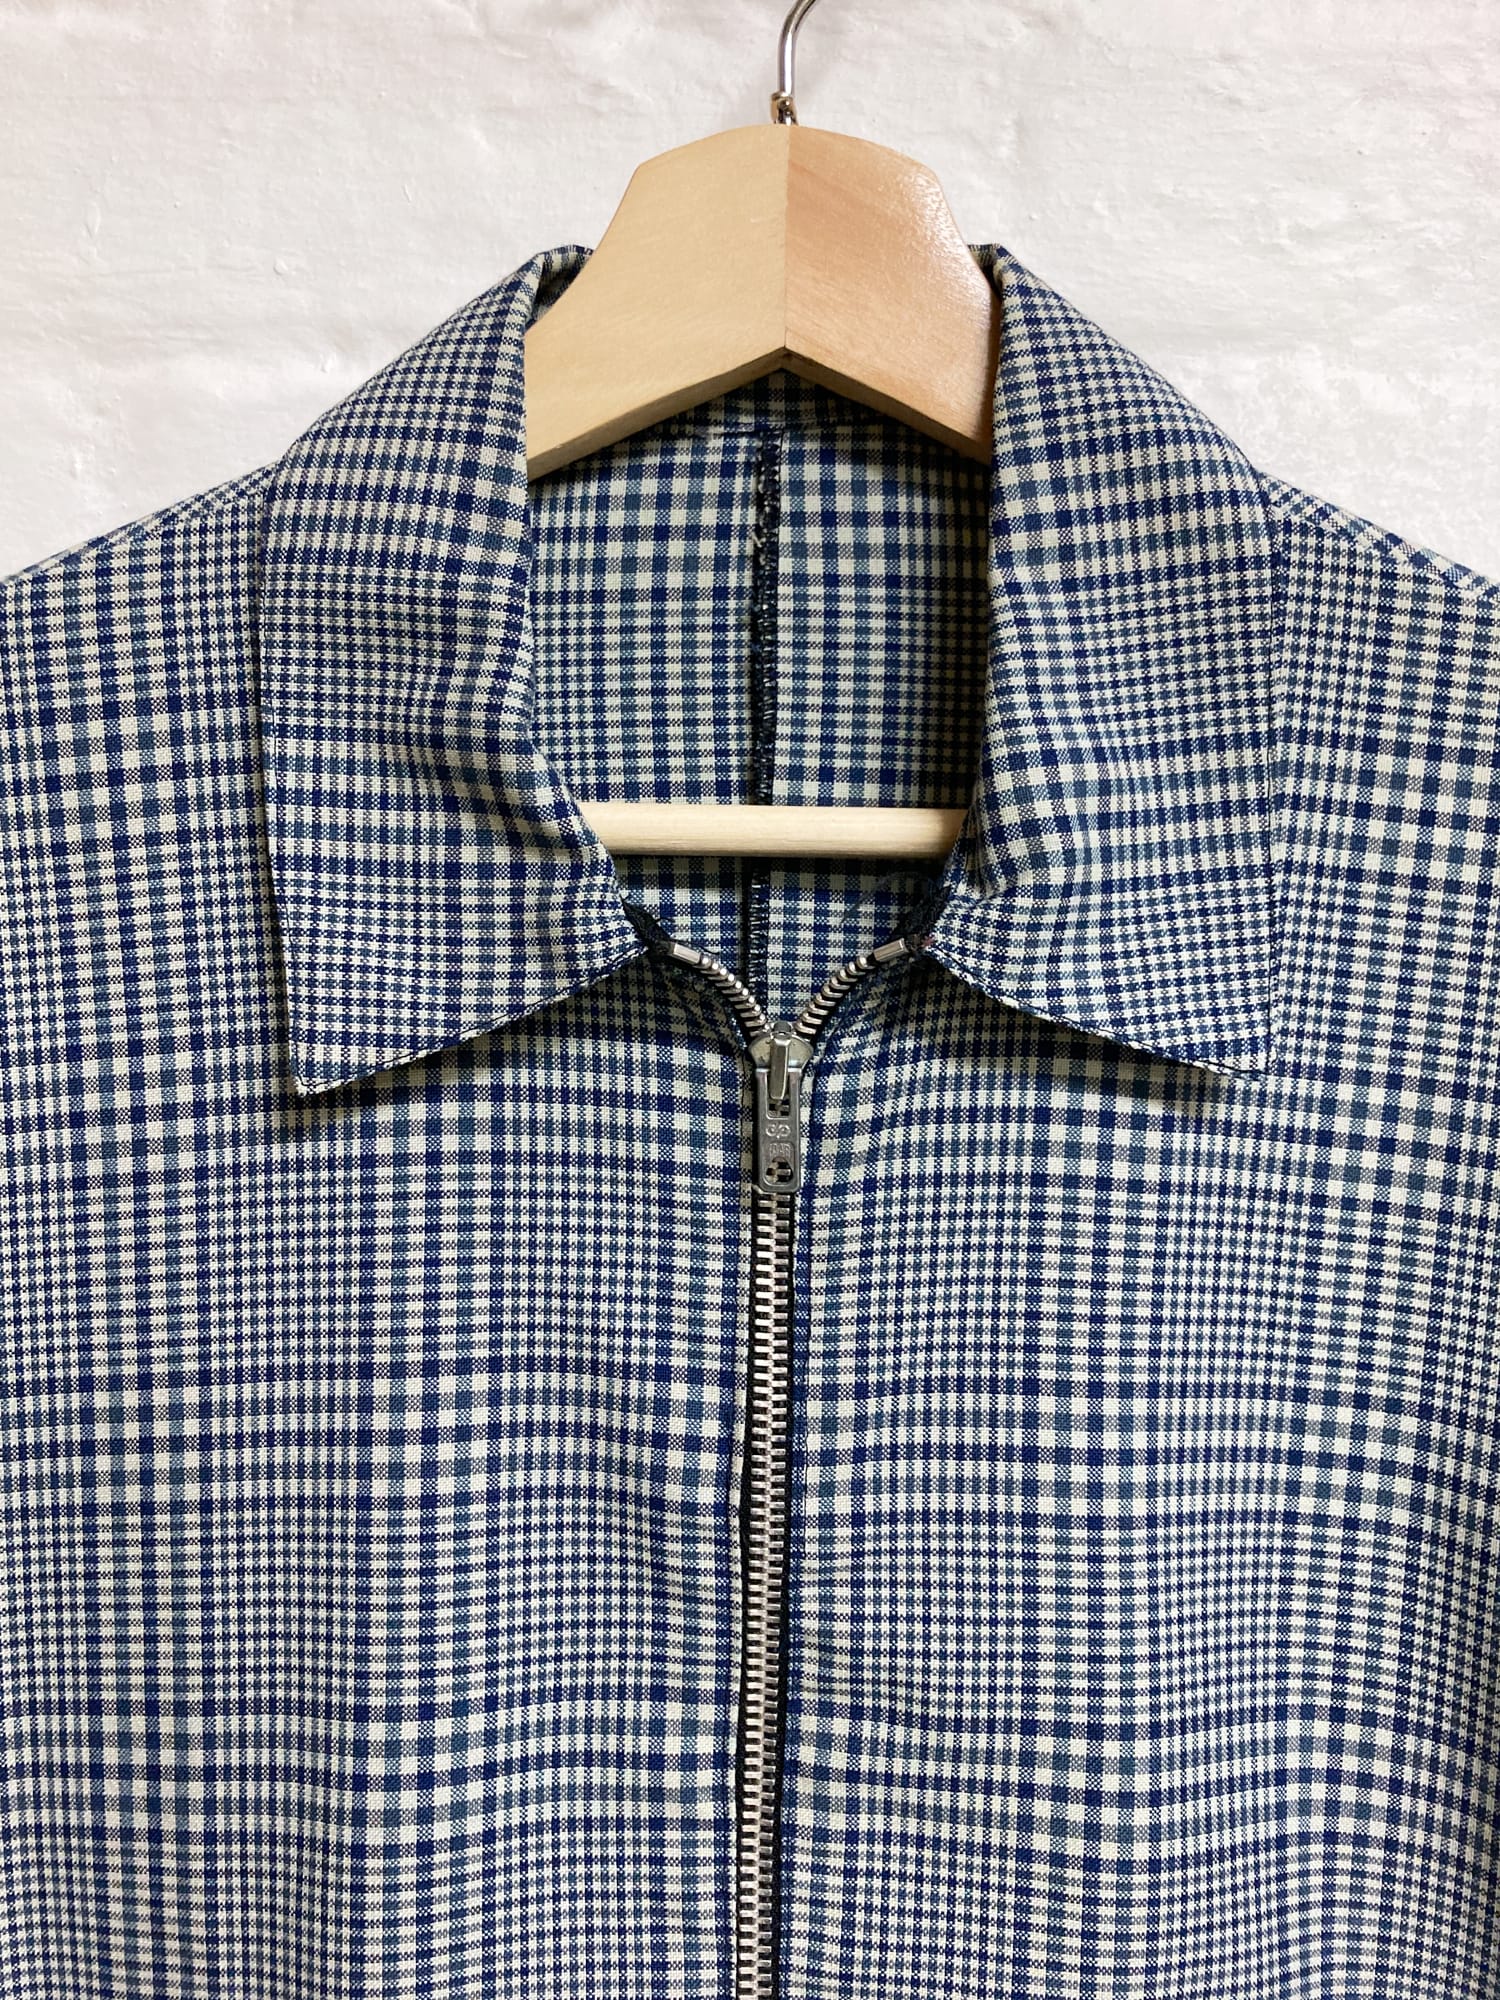 Jean Colonna spring 1994 blue grey plaid wool zip jacket - size M